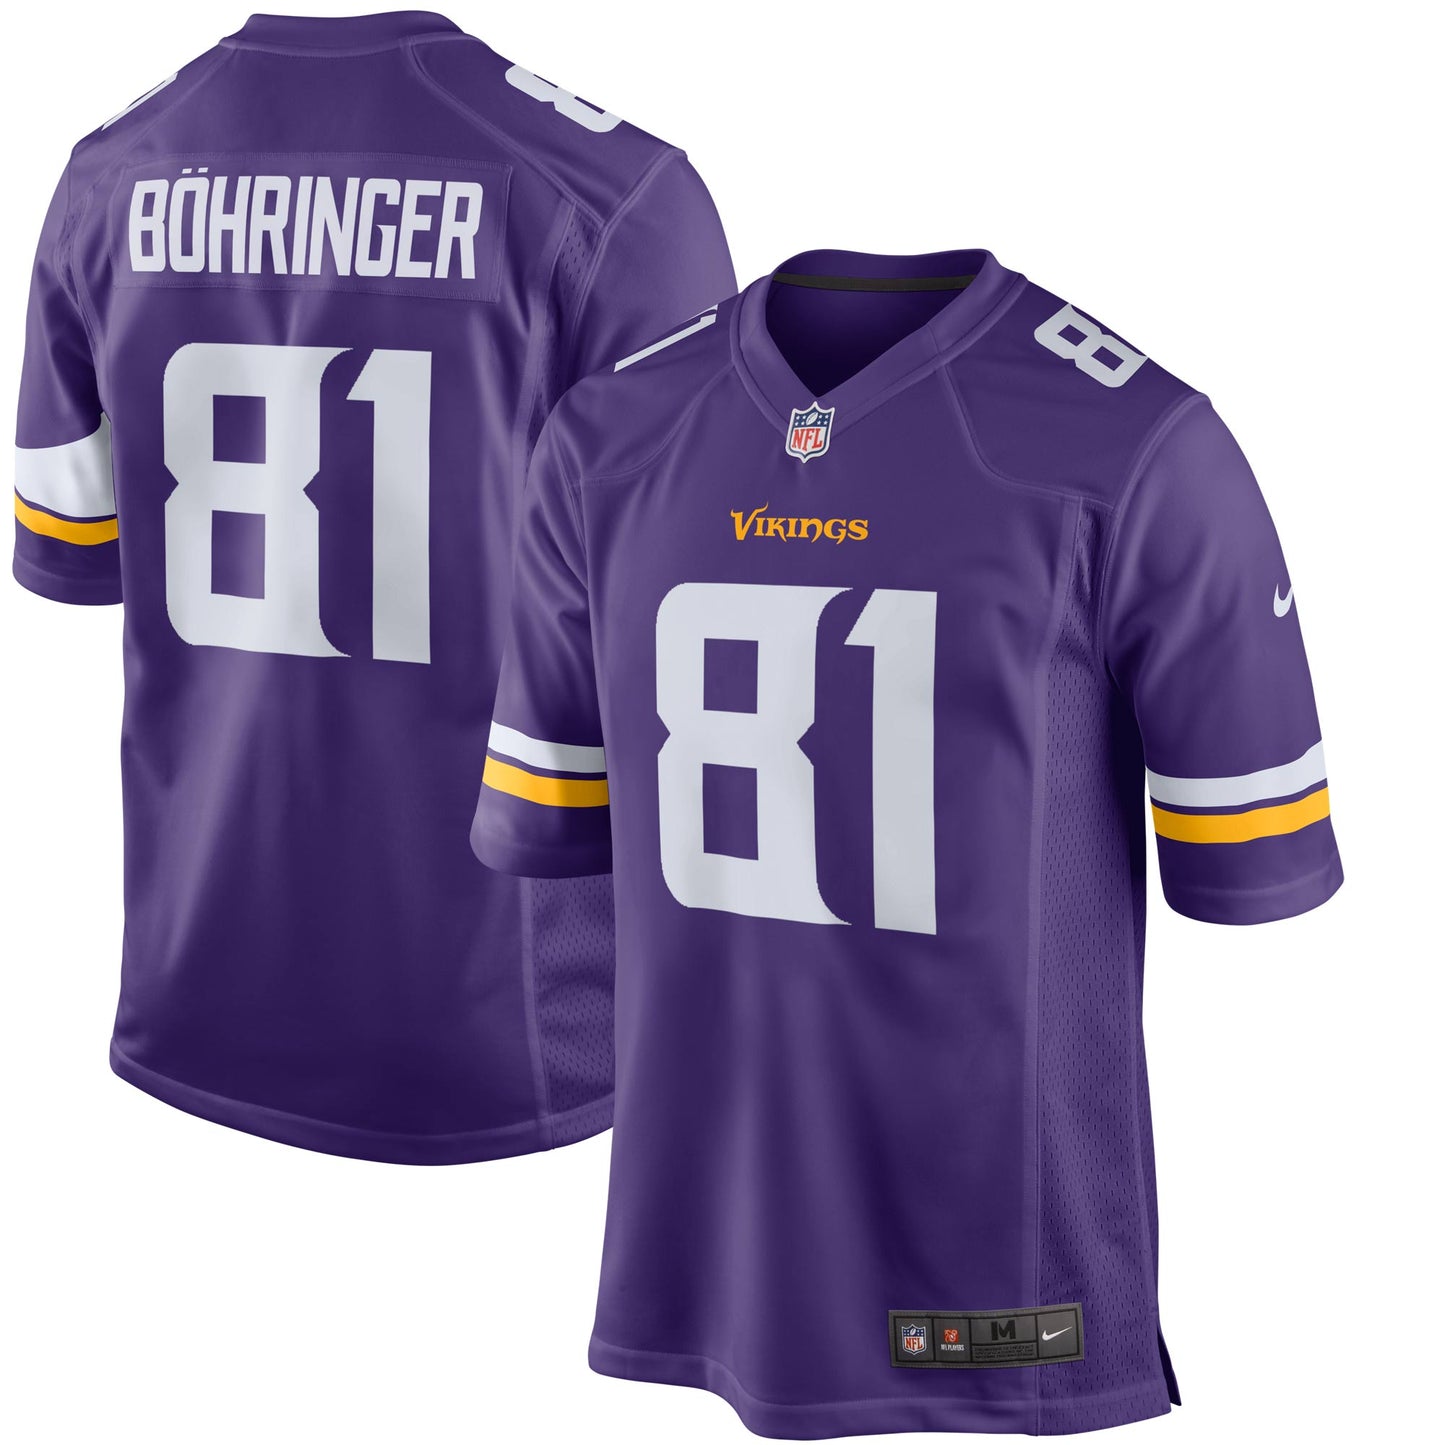 Moritz Bohringer Minnesota Vikings Nike Team Color Game Jersey - Purple